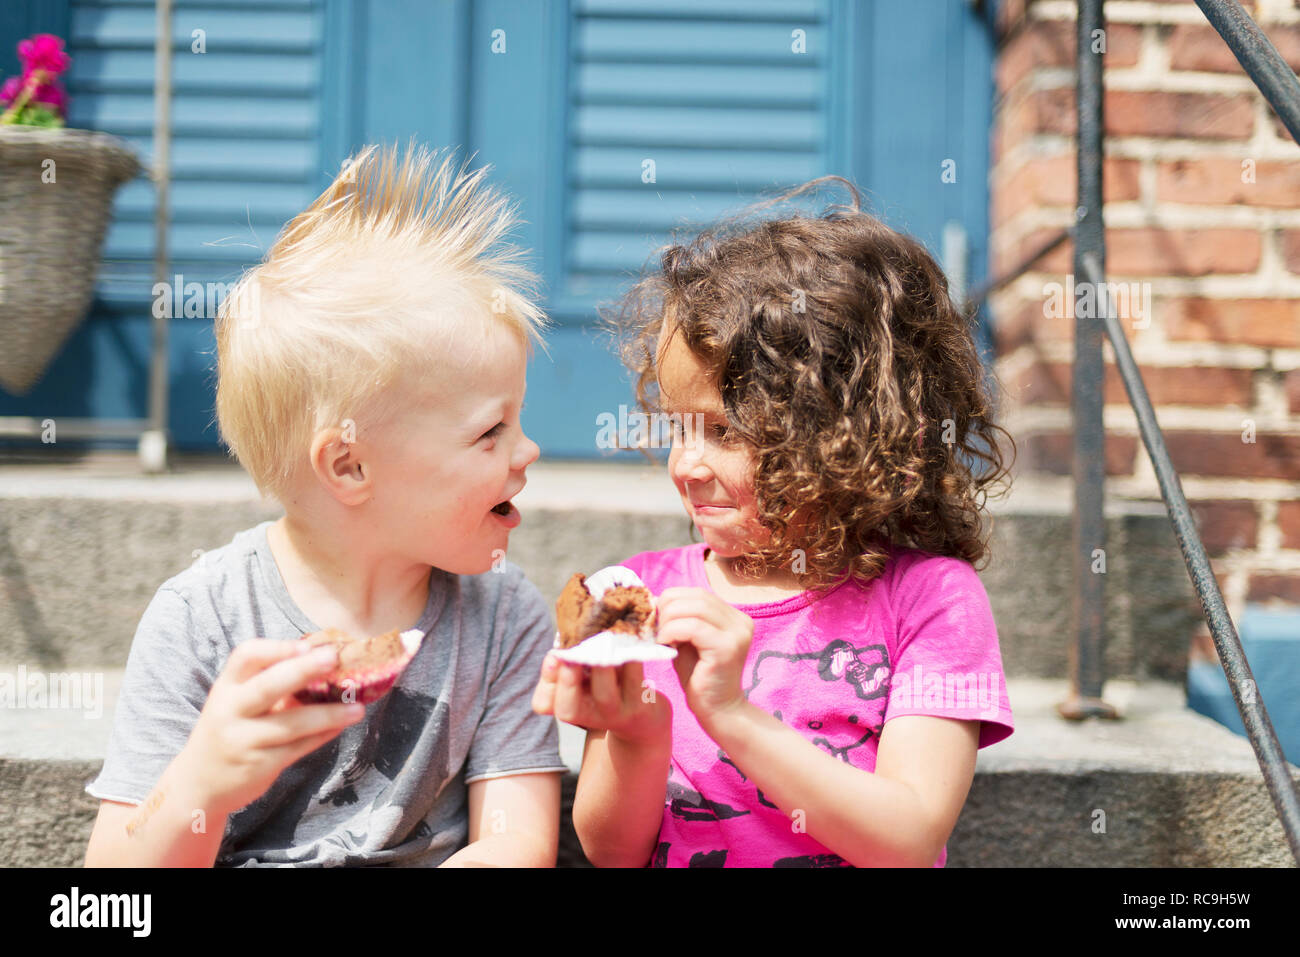 Children eating cupcakes Stock Photo